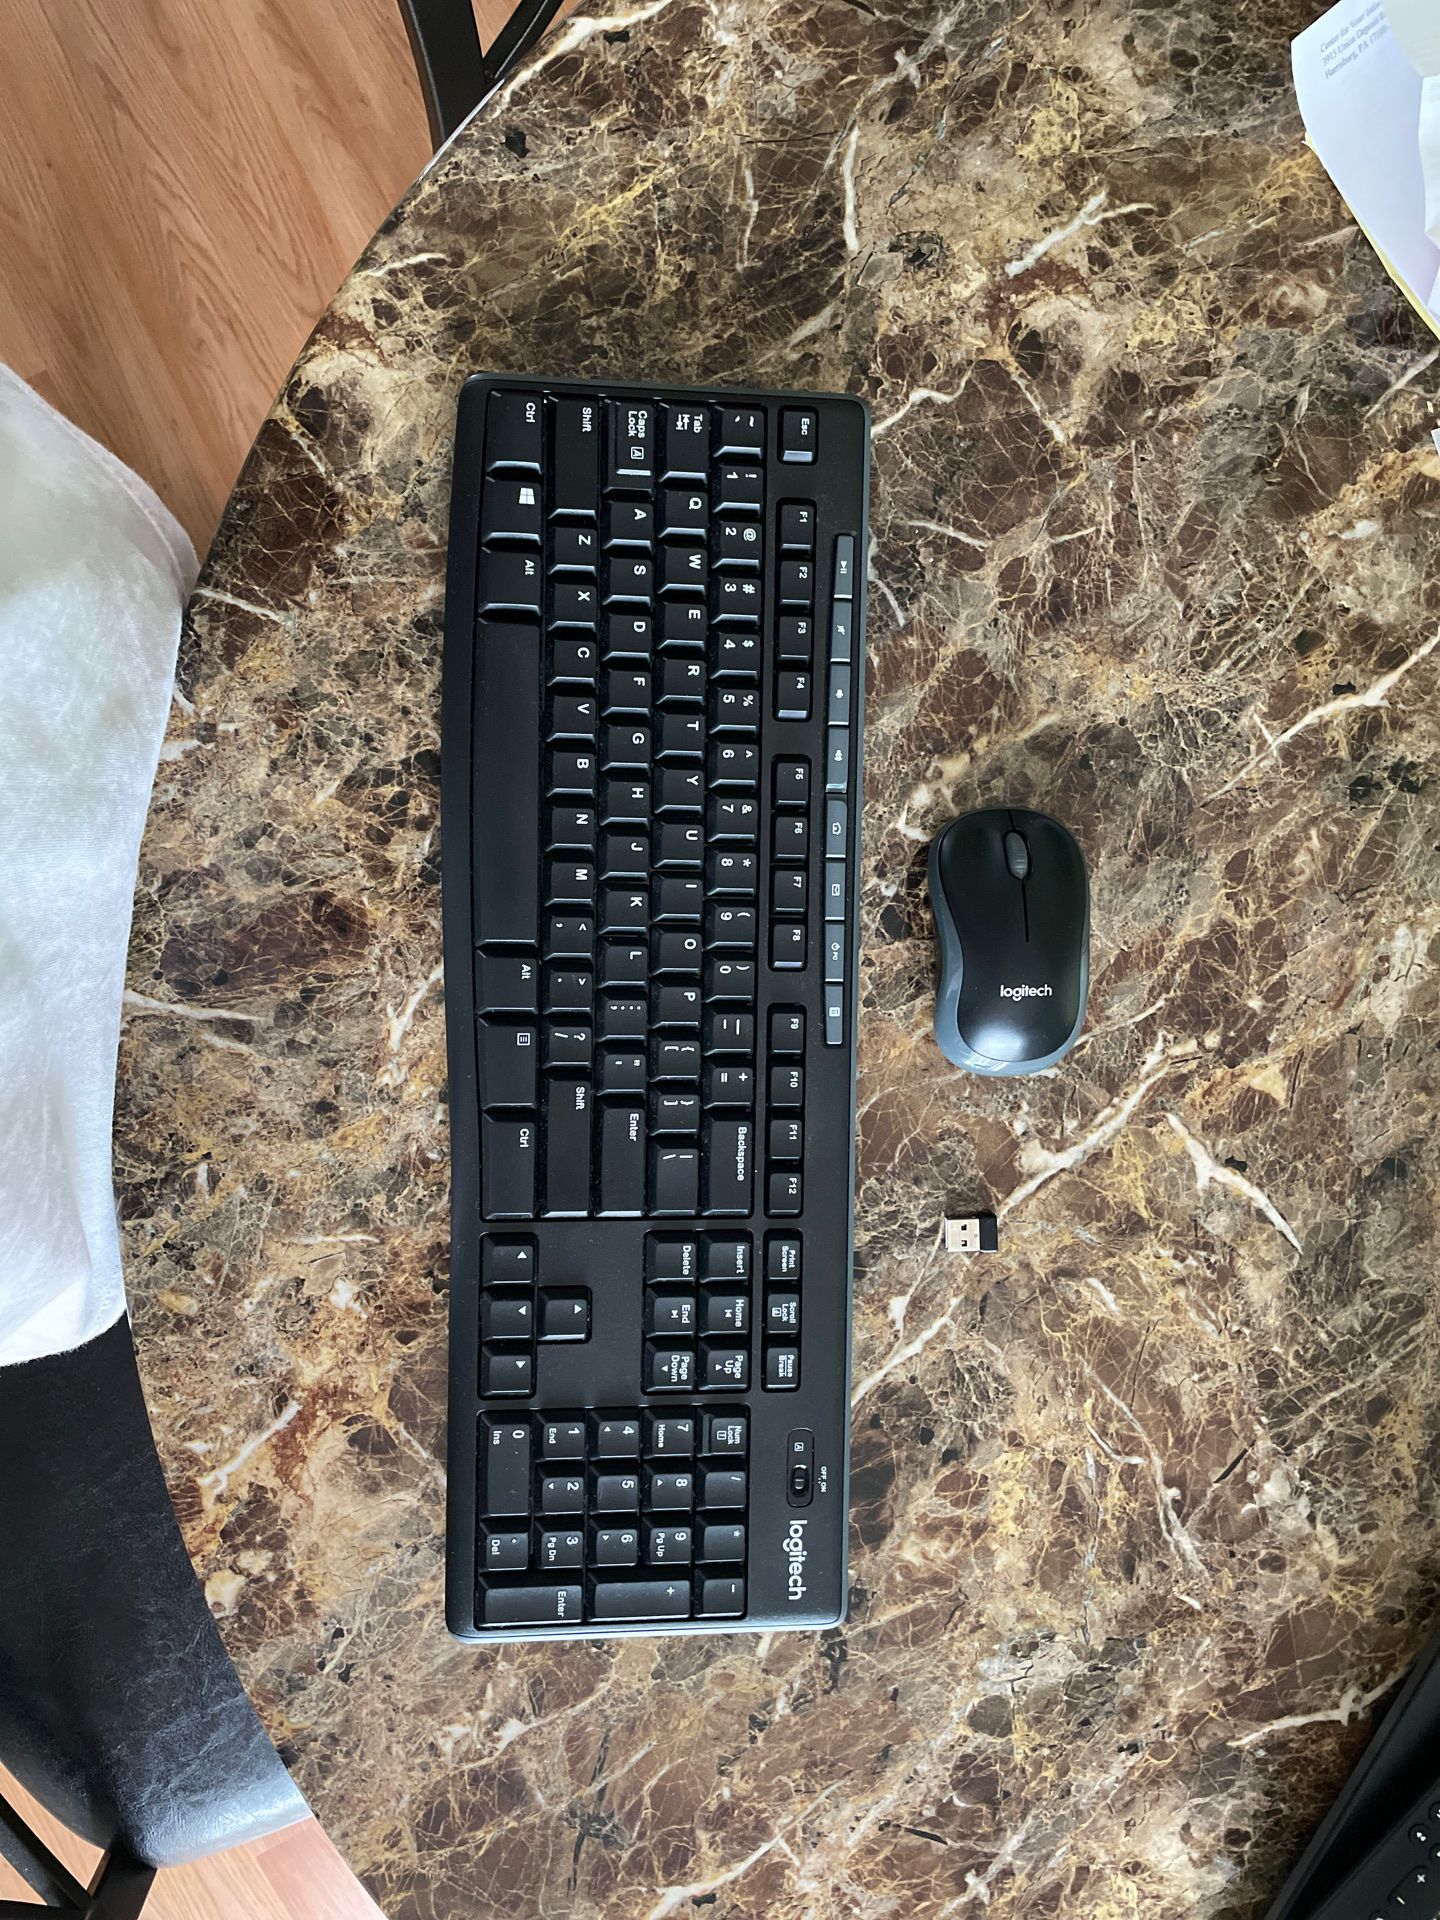 Logitech Wireless Keyboard with Mouse